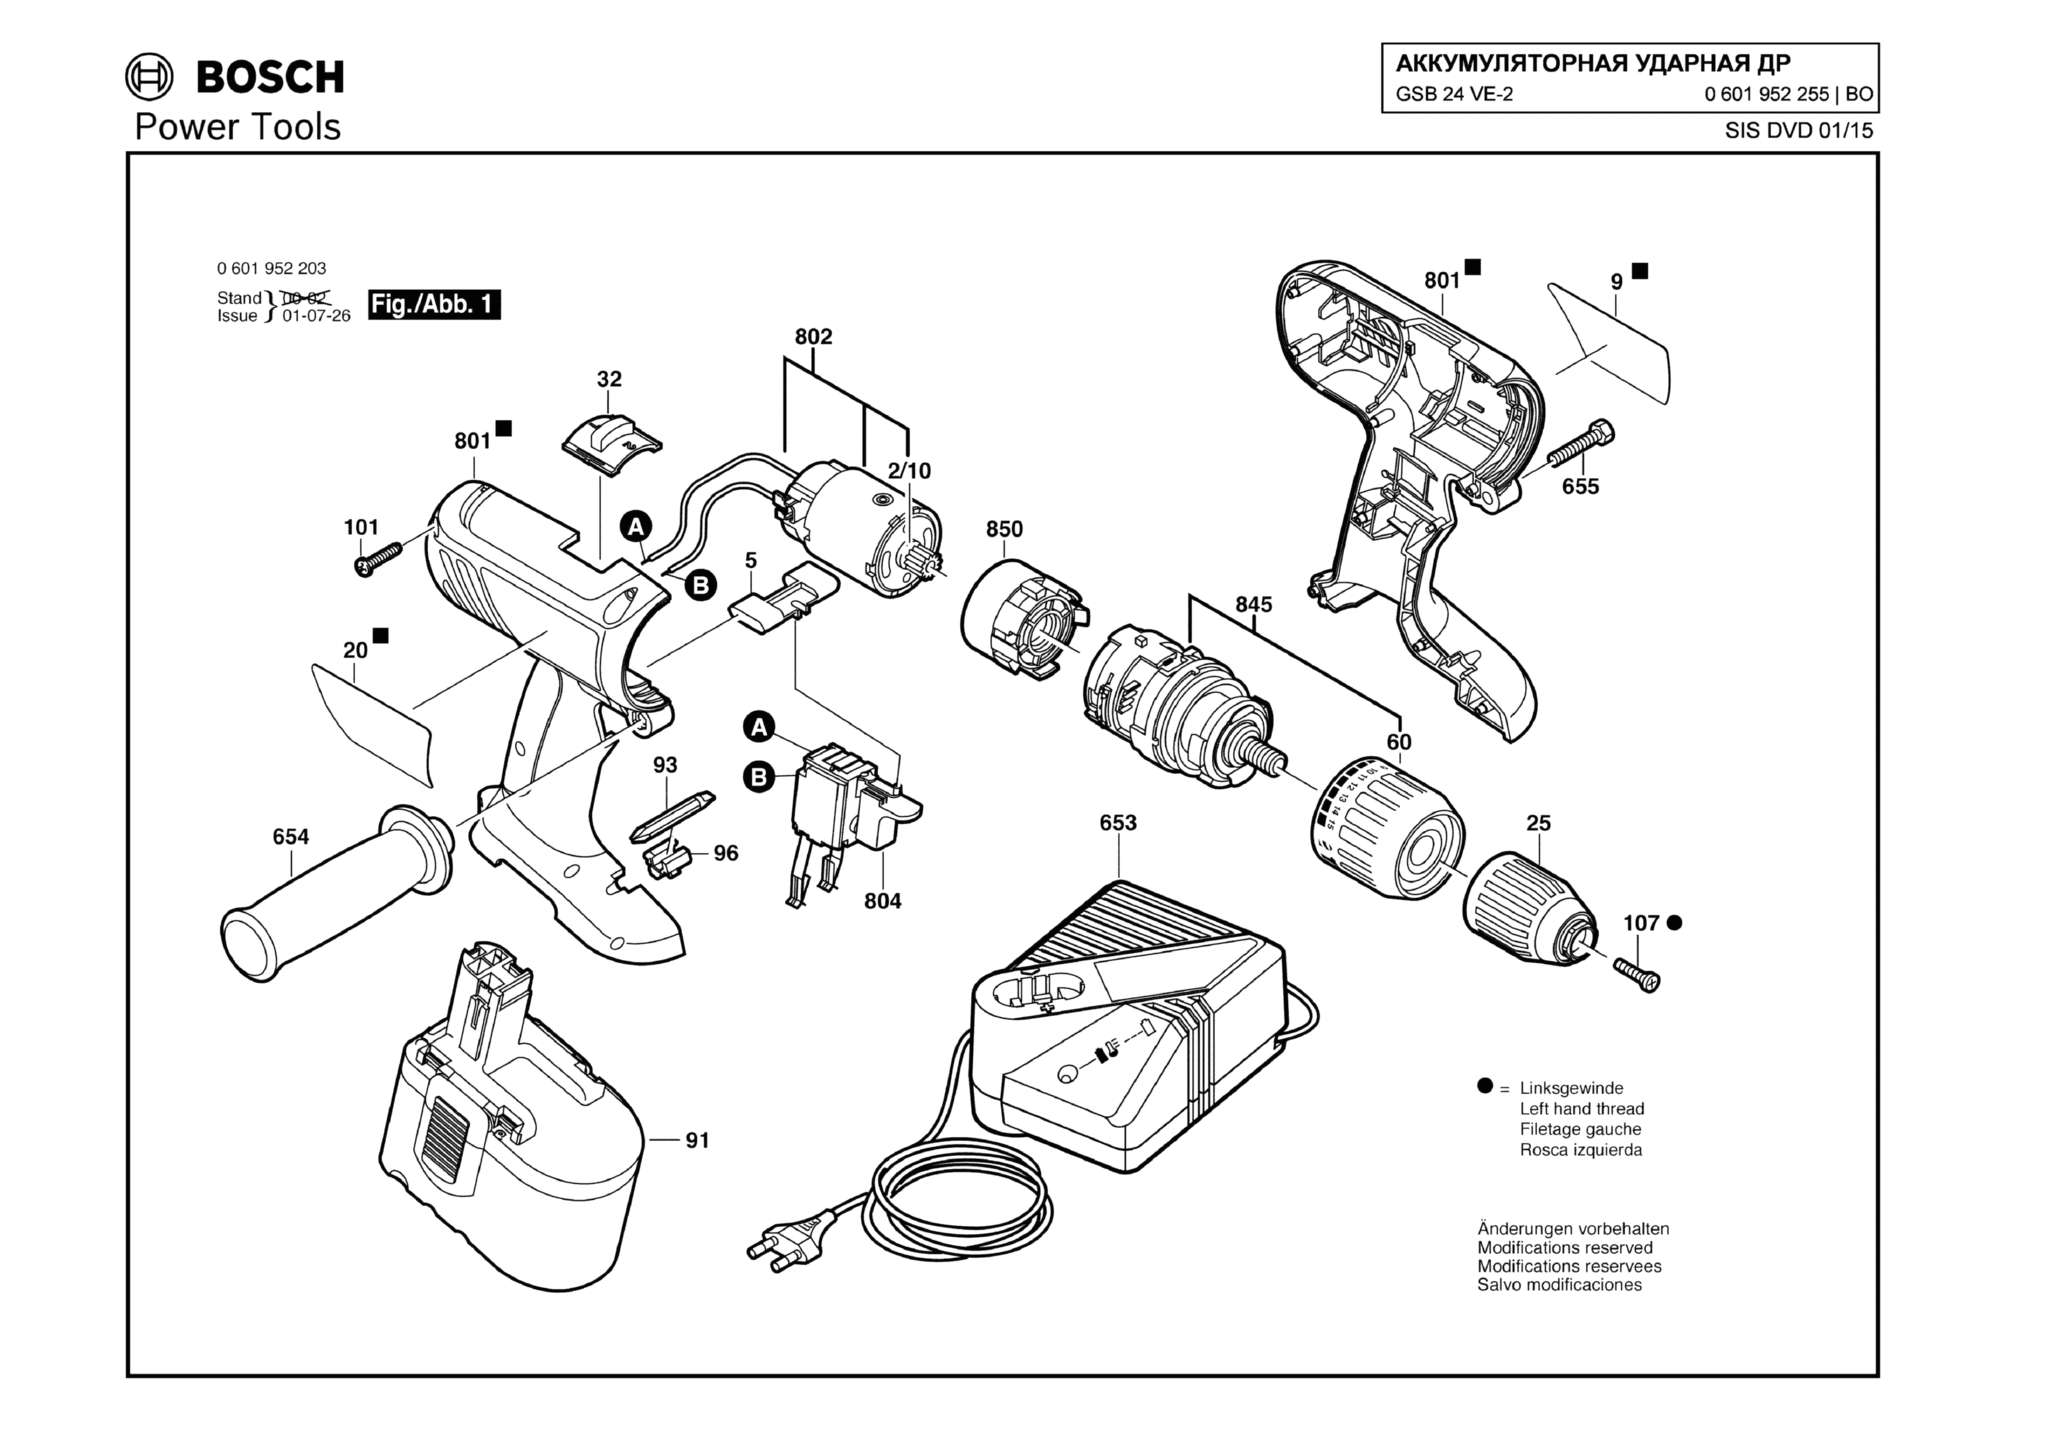 Запчасти, схема и деталировка Bosch GSB 24 VE-2 (ТИП 0601952255)